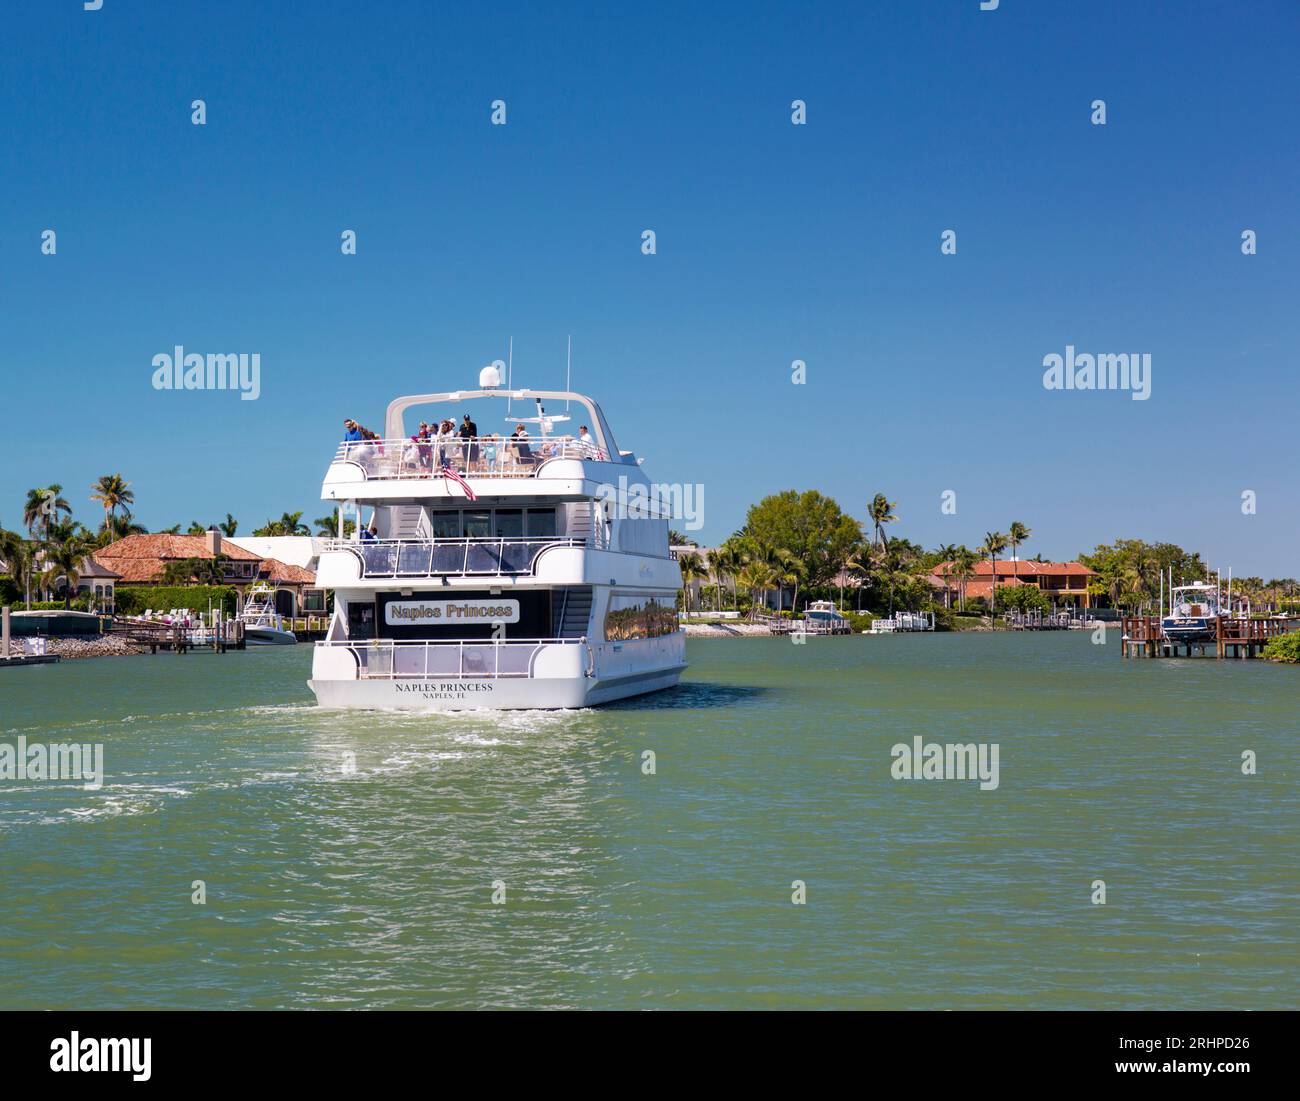 Neapel, Florida, USA. Das berühmte lokale Sightseeing-Boot, die „Naples Princess“, fährt vorbei an erstklassigen Immobilien am Ufer der Bucht von Neapel. Stockfoto